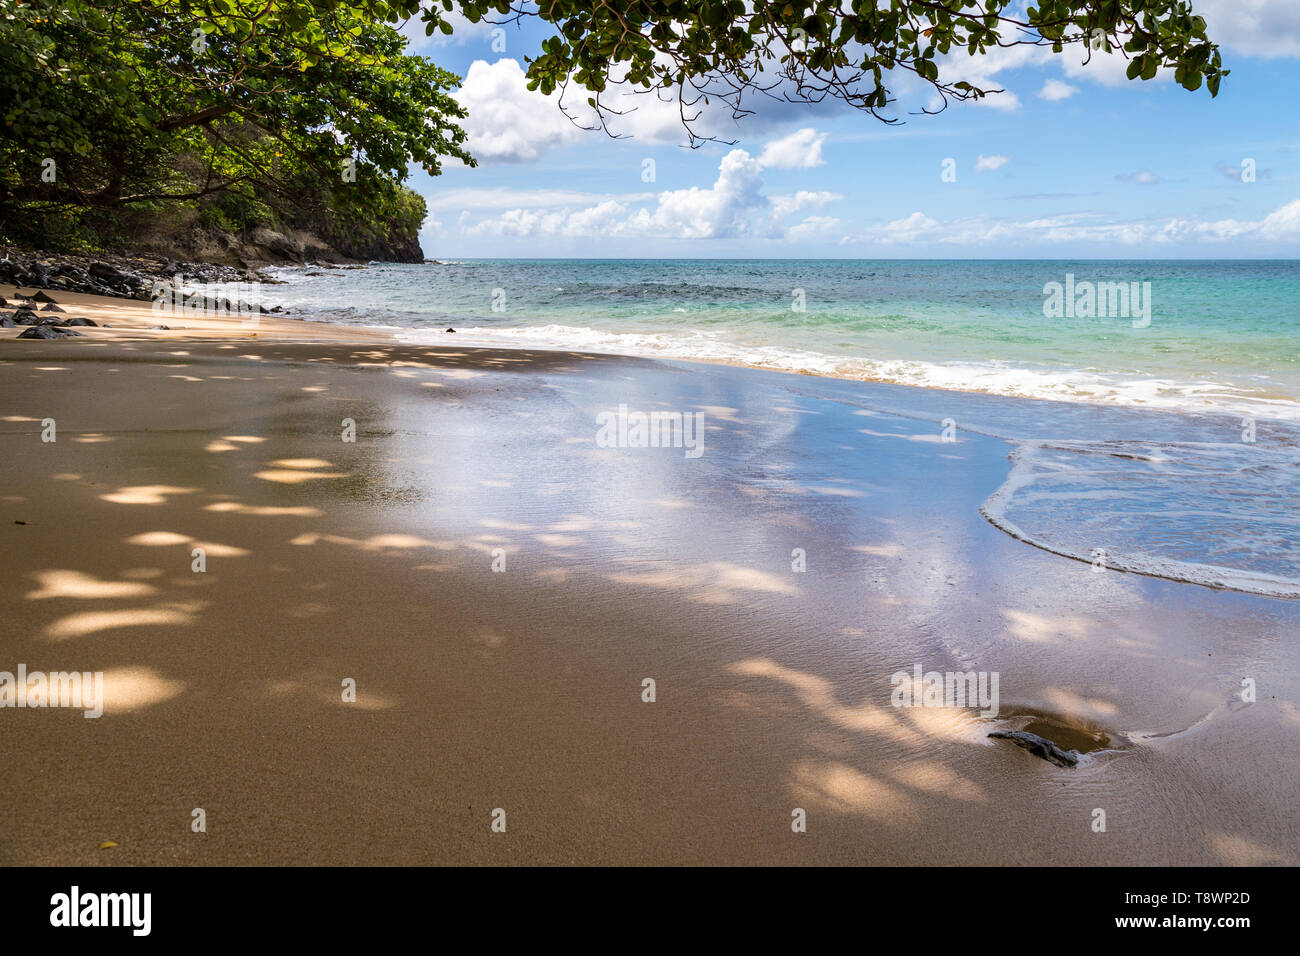 La playa de Toc, St Lucia, Caribe Foto de stock